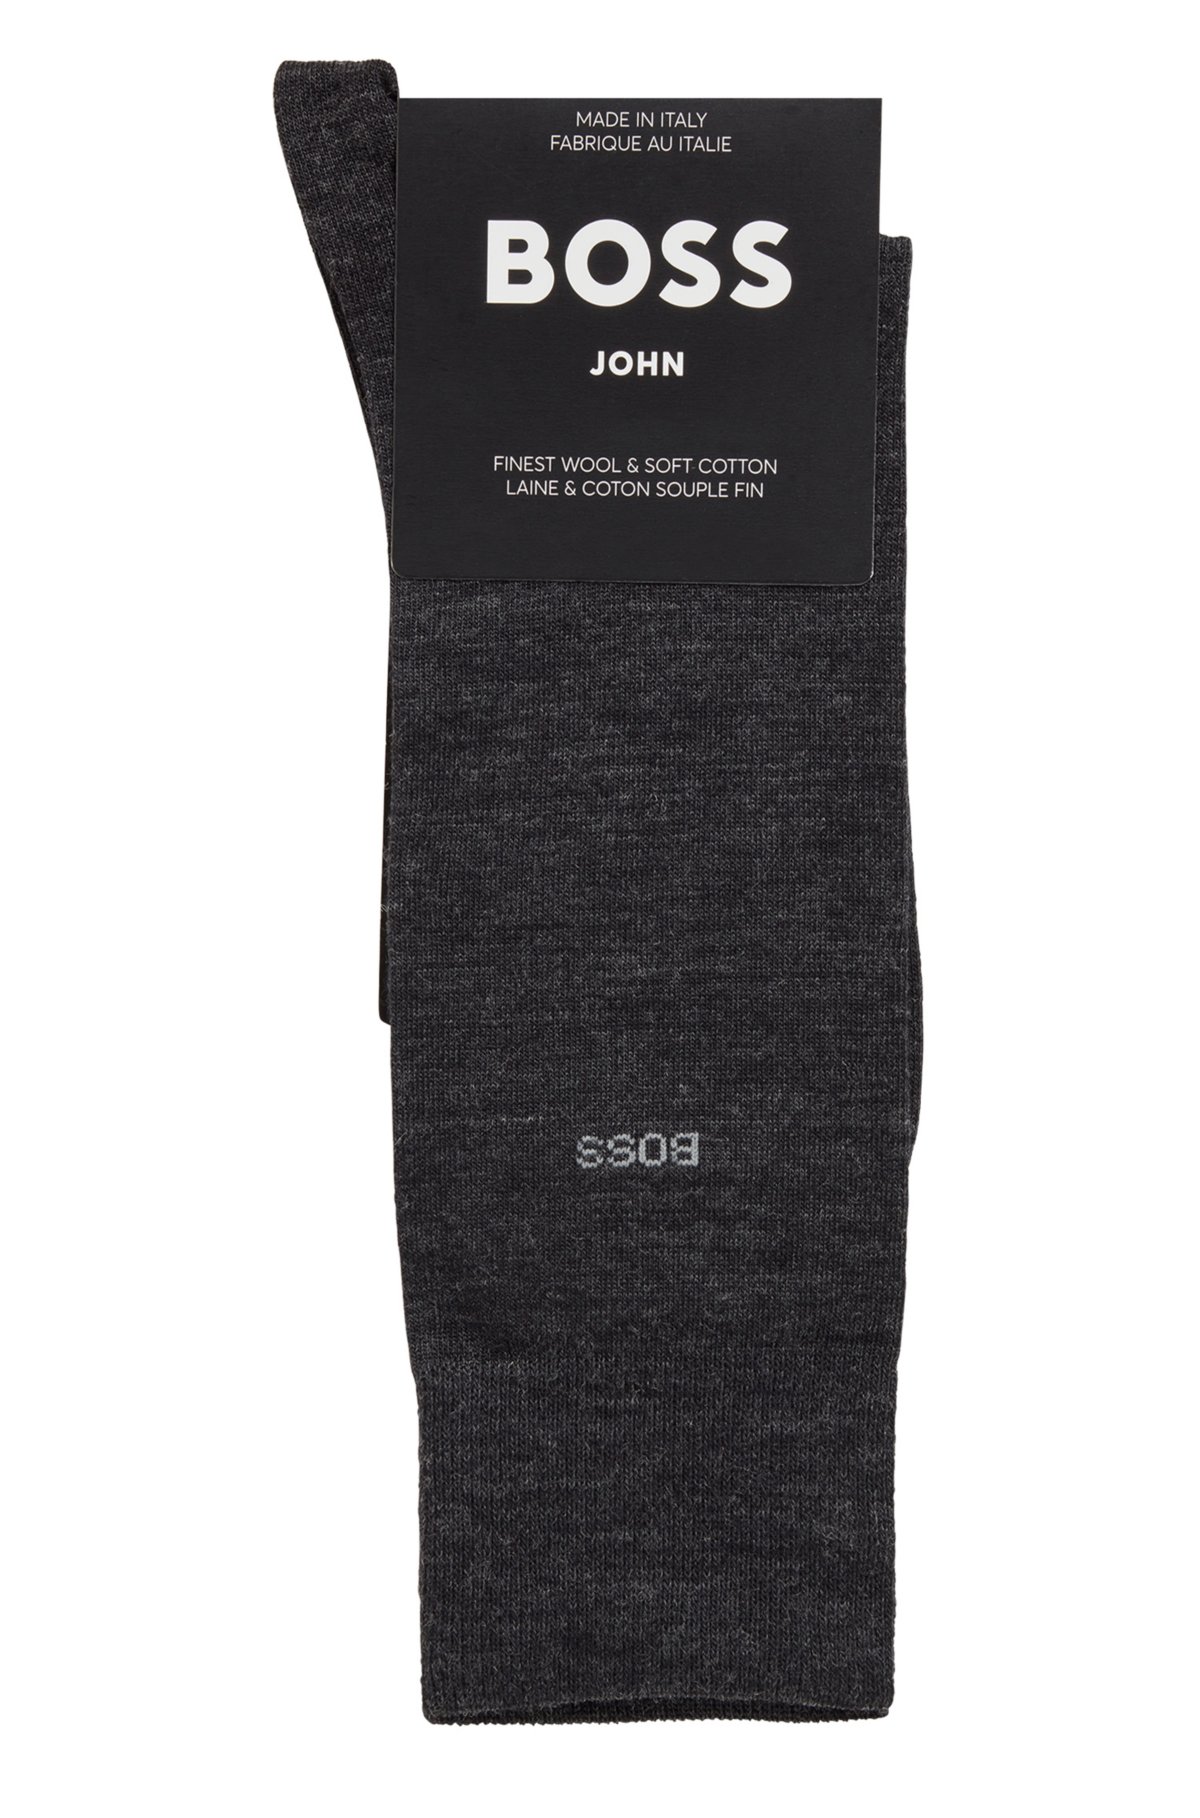 Regular-length logo socks in a wool blend, Dark Grey